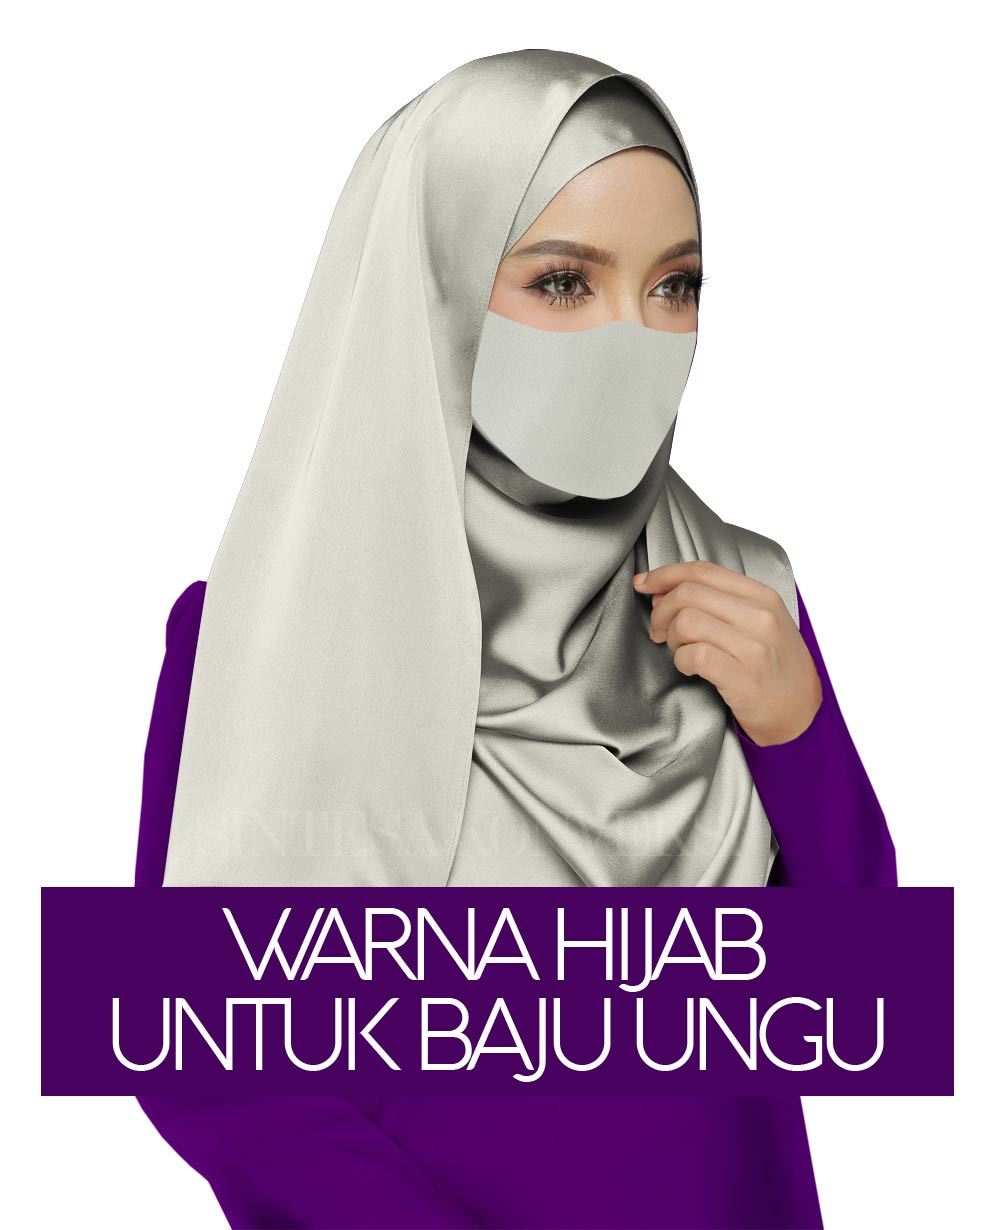 Baju Ungu Tua Cocok dengan Jilbab Warna Apa